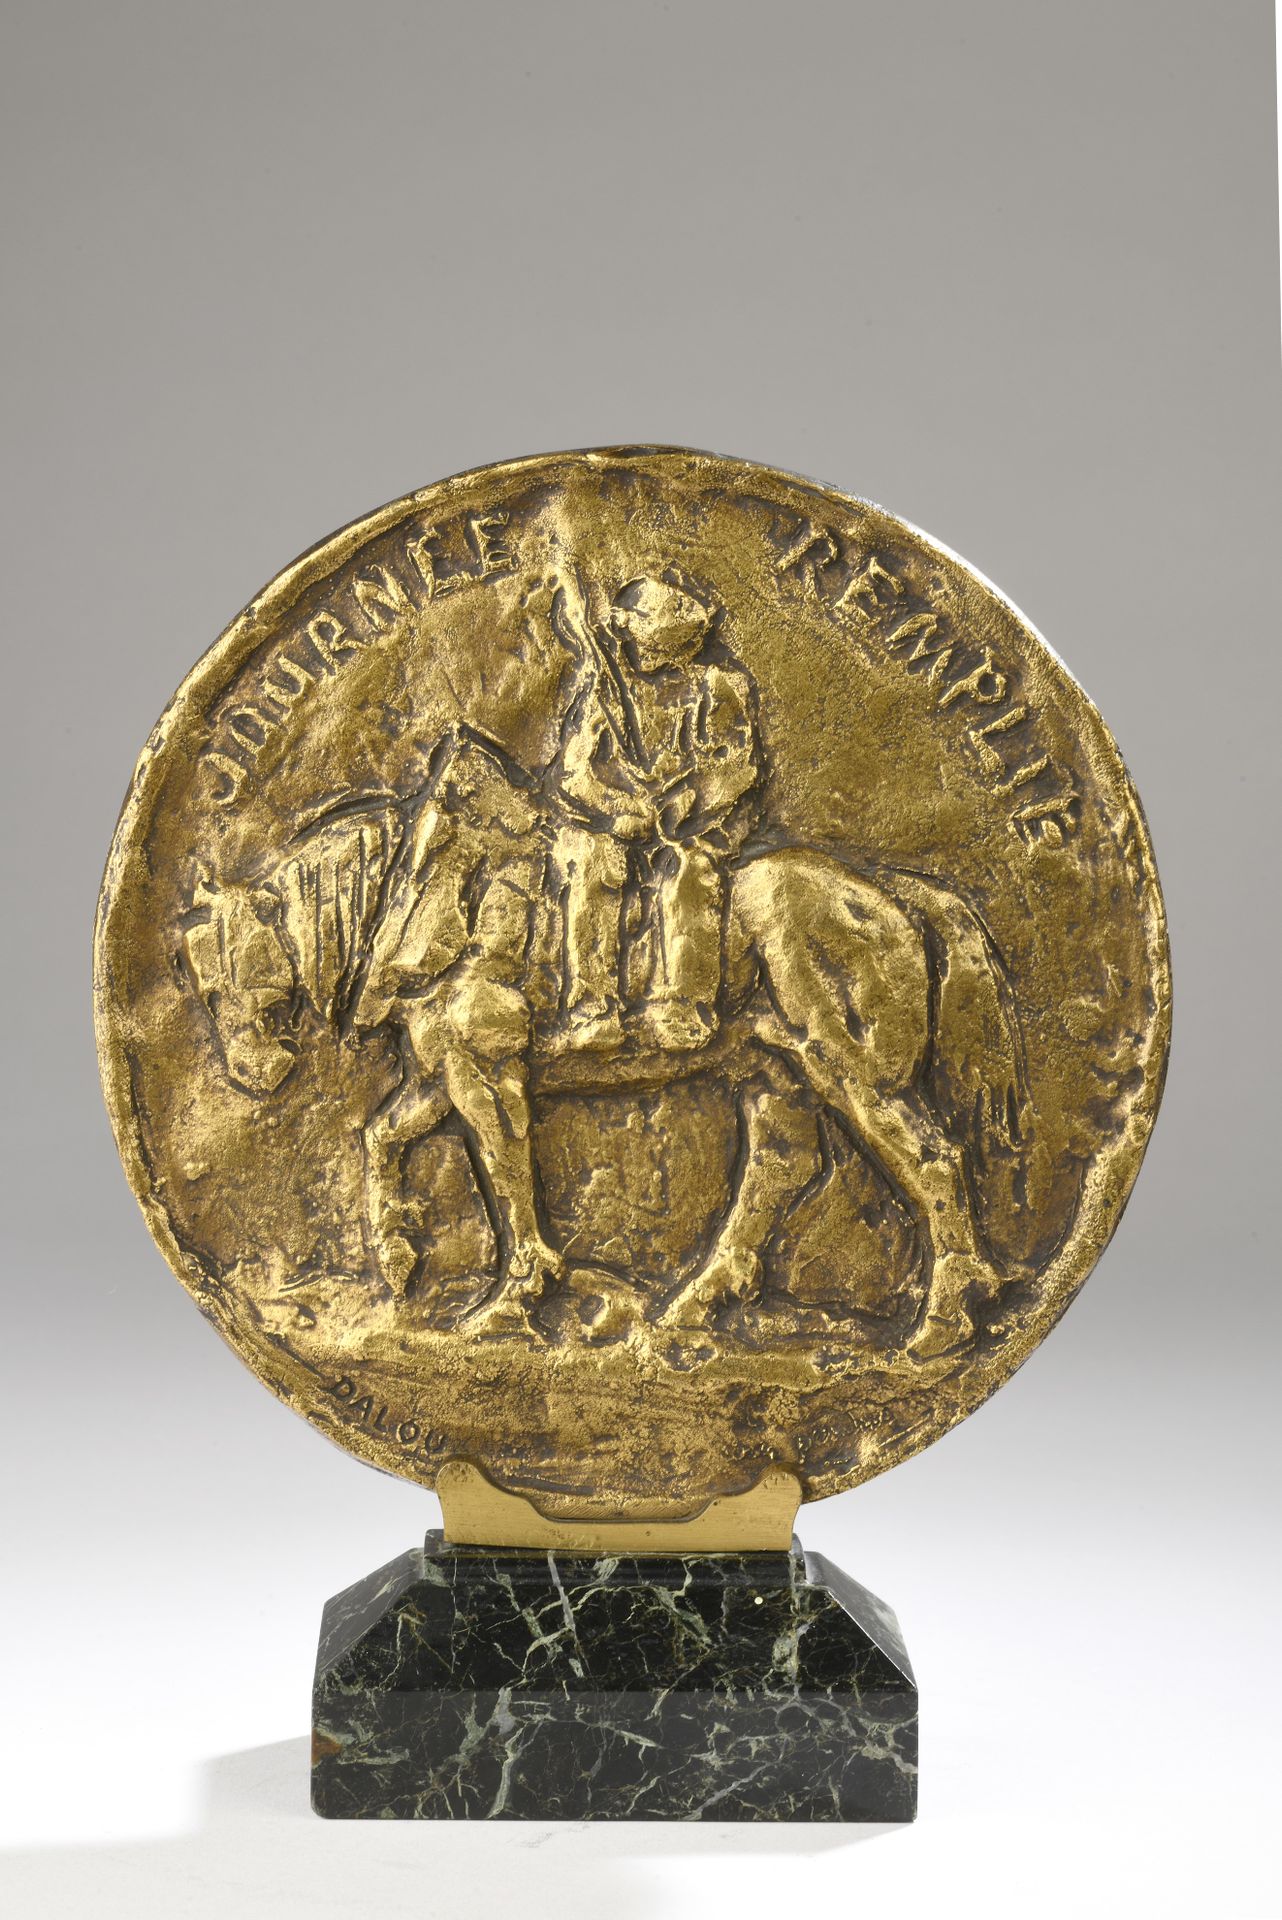 Null 艾梅-朱尔斯-达鲁(1838-1902) 
一个完整的一天
1889年至1898年期间创作的模型 
鎏金铜质奖章
右下方有 "DALOU "签名 
边&hellip;